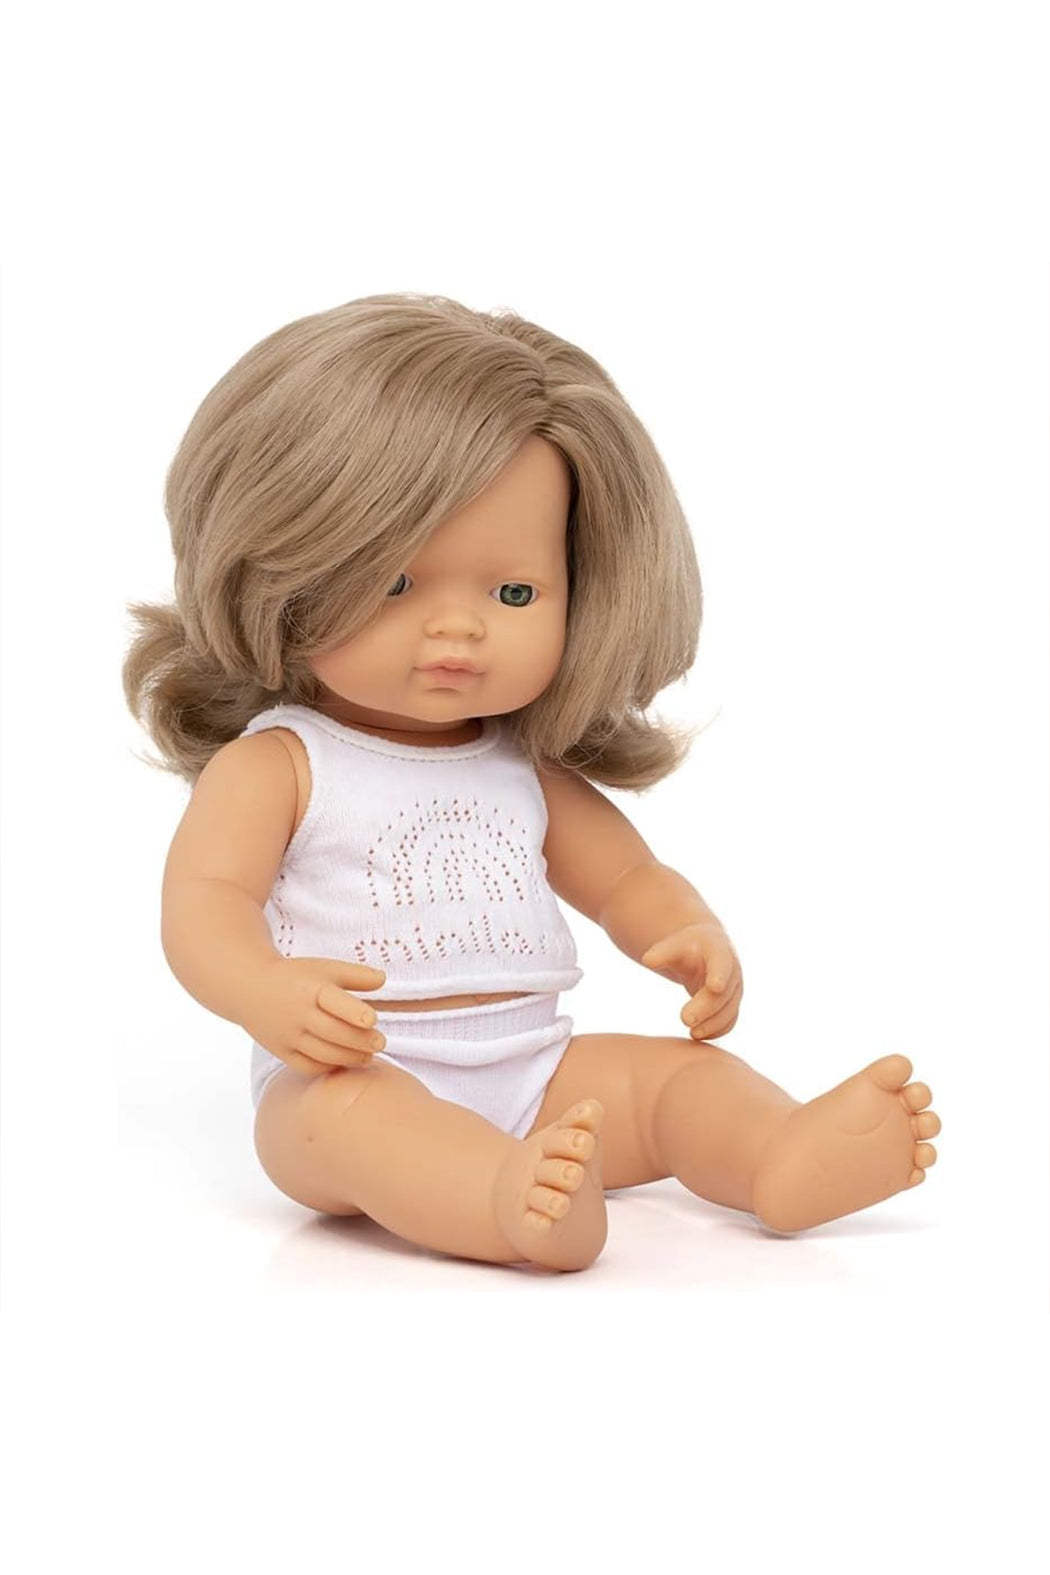 Miniland Baby Girl Doll Blond - 15"